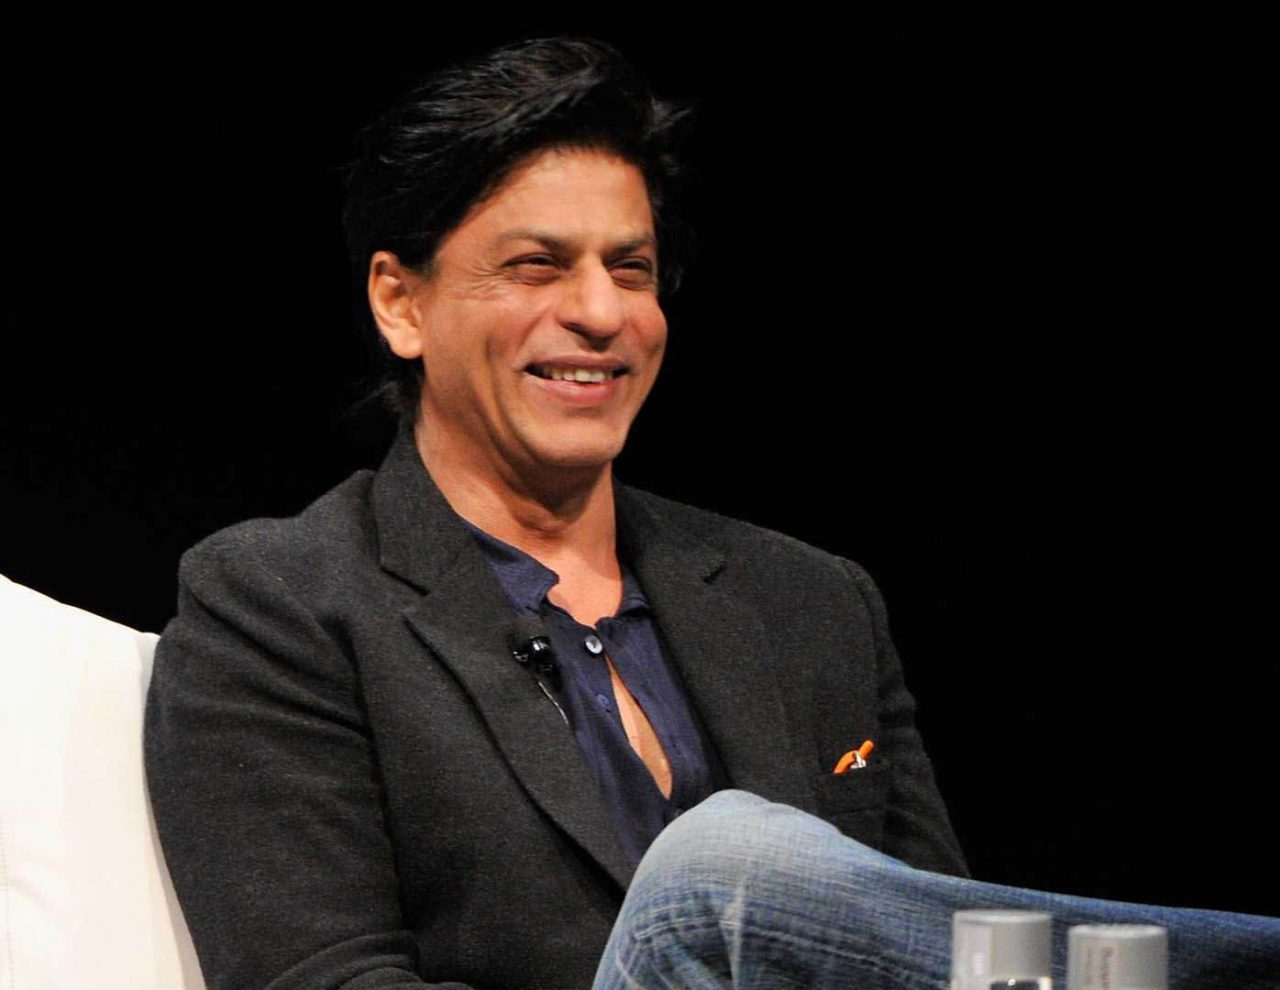 Best Smiling Pics Of Shah Rukh Khan